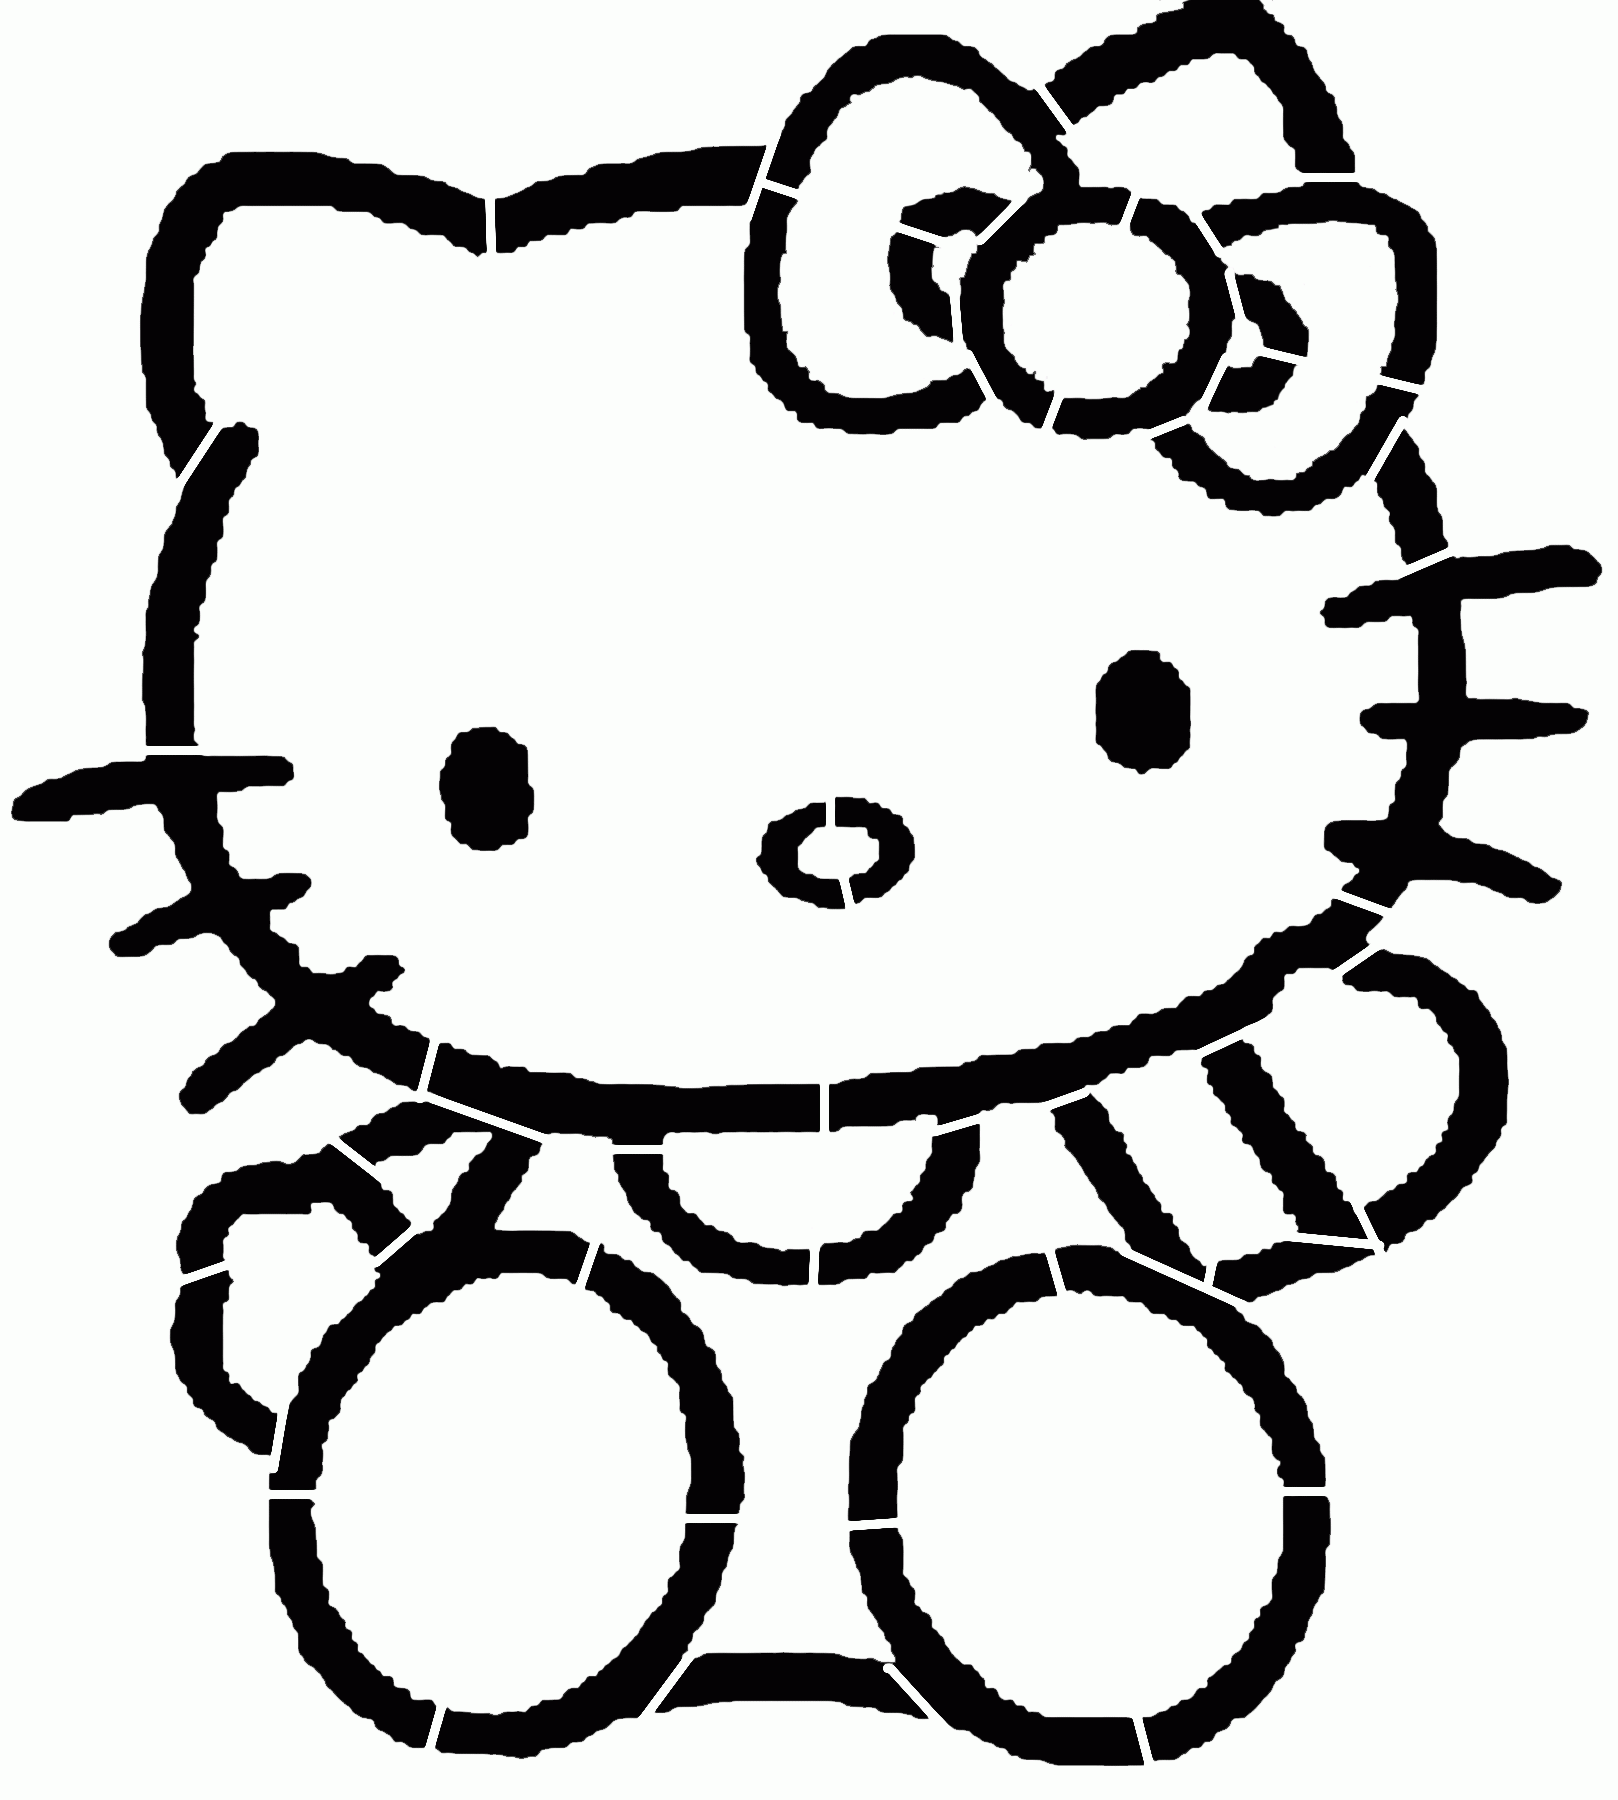 Stencil Hello Kitty- 15x20 - Ref A2093